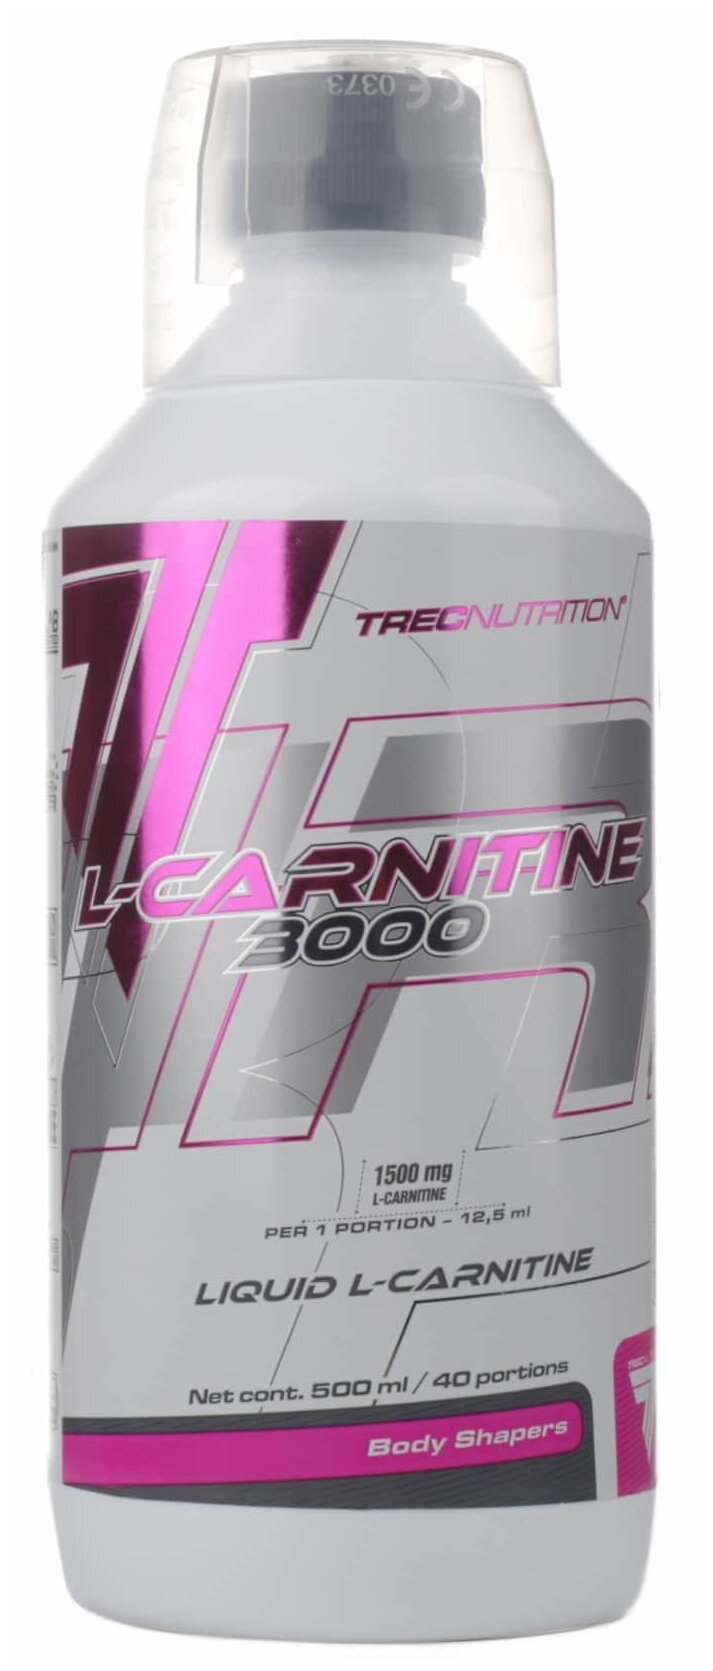 L карнитин для похудения, 500 мл, Trec Nutrition L-Carnitine 3000, вкус: вишня